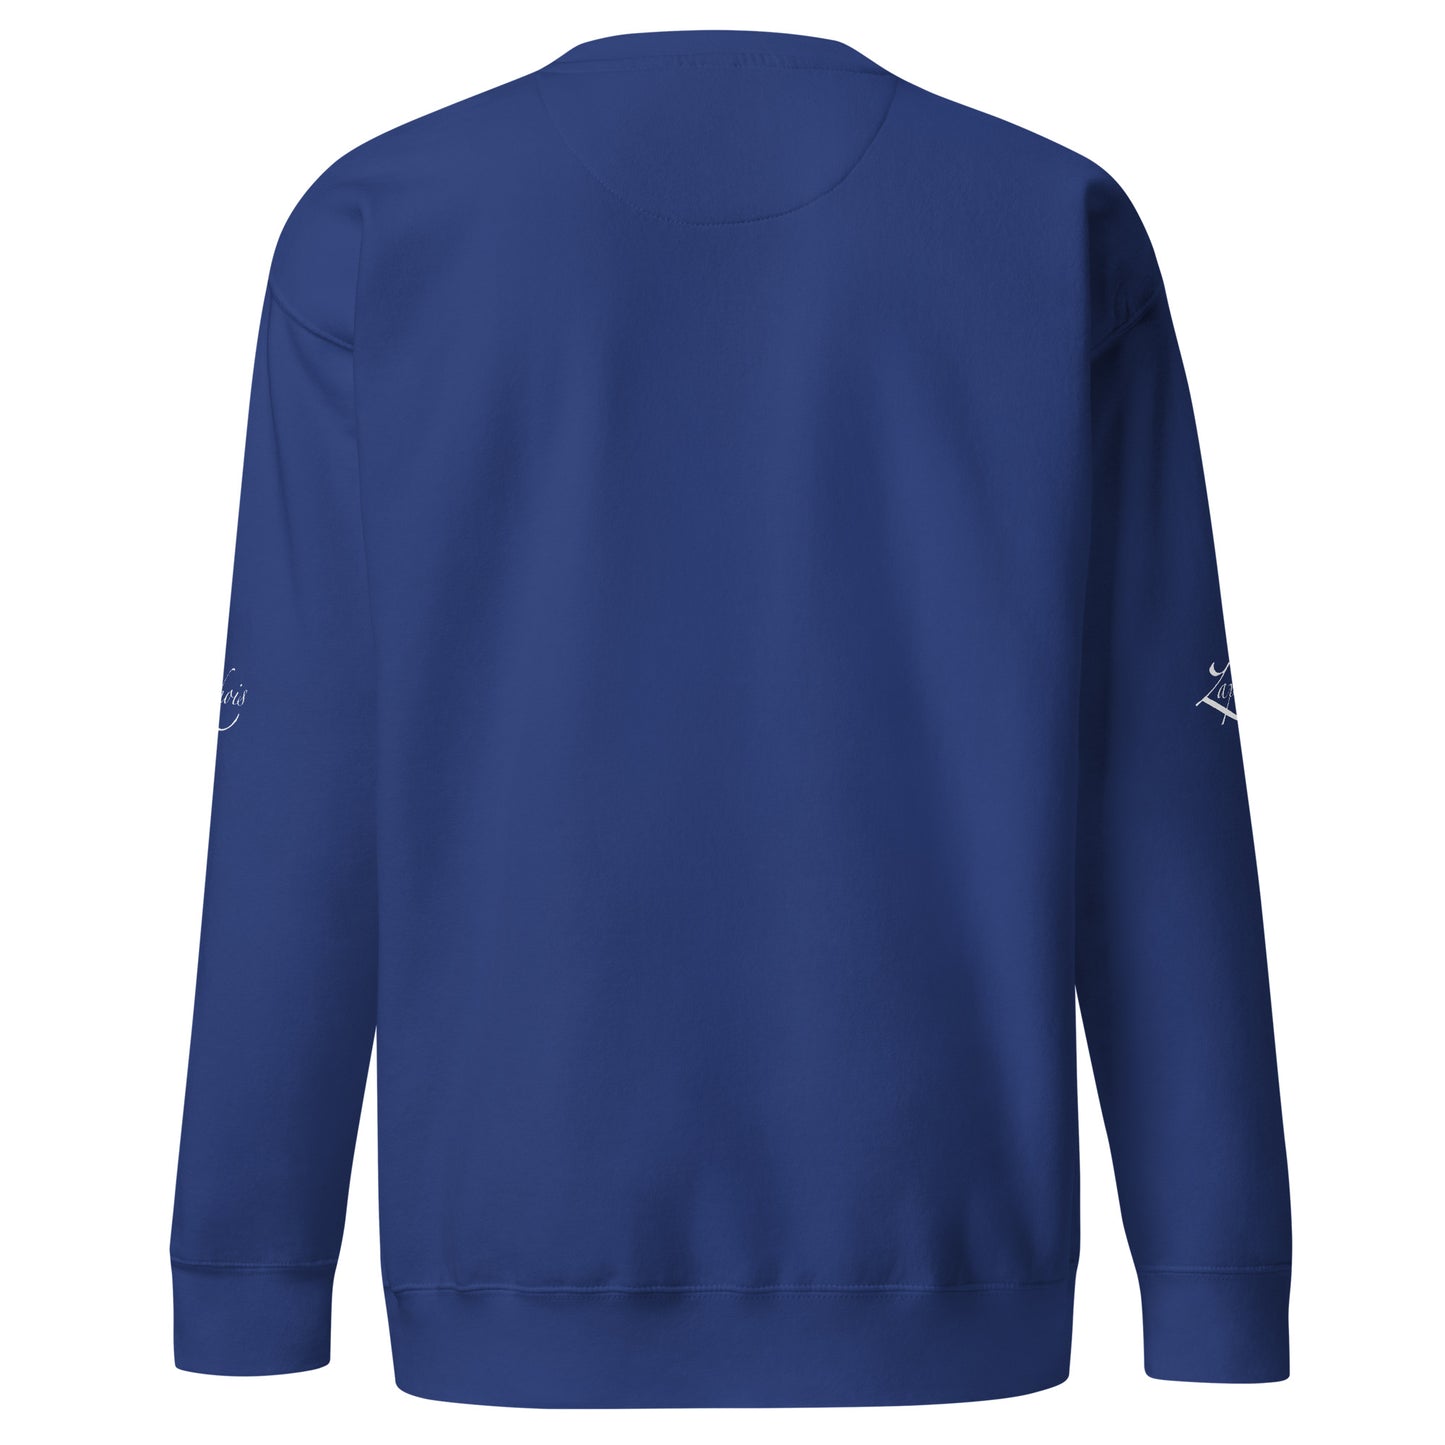 zaphois blue signature warm shirt